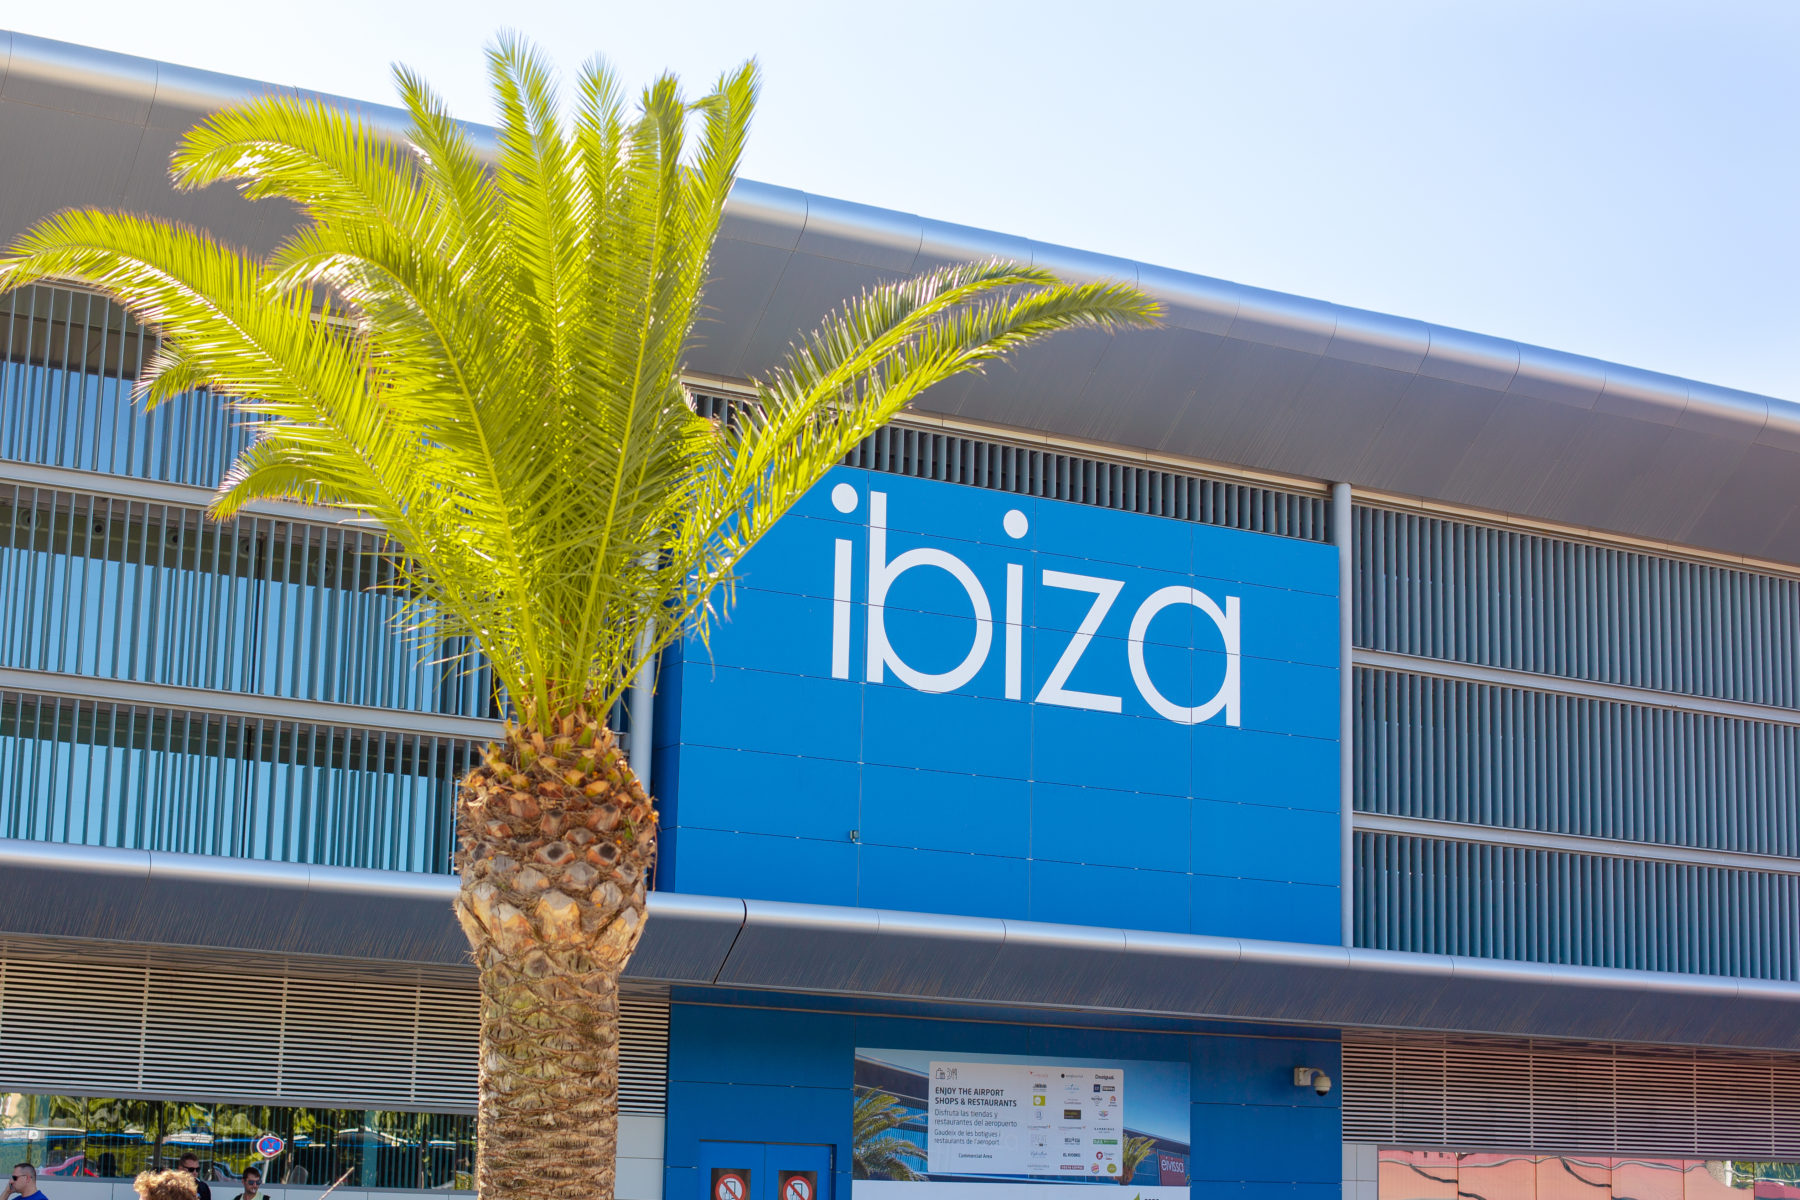 Ibiza Photographer for Perfect Photo Shoot | The Photo Experiences (TPE)